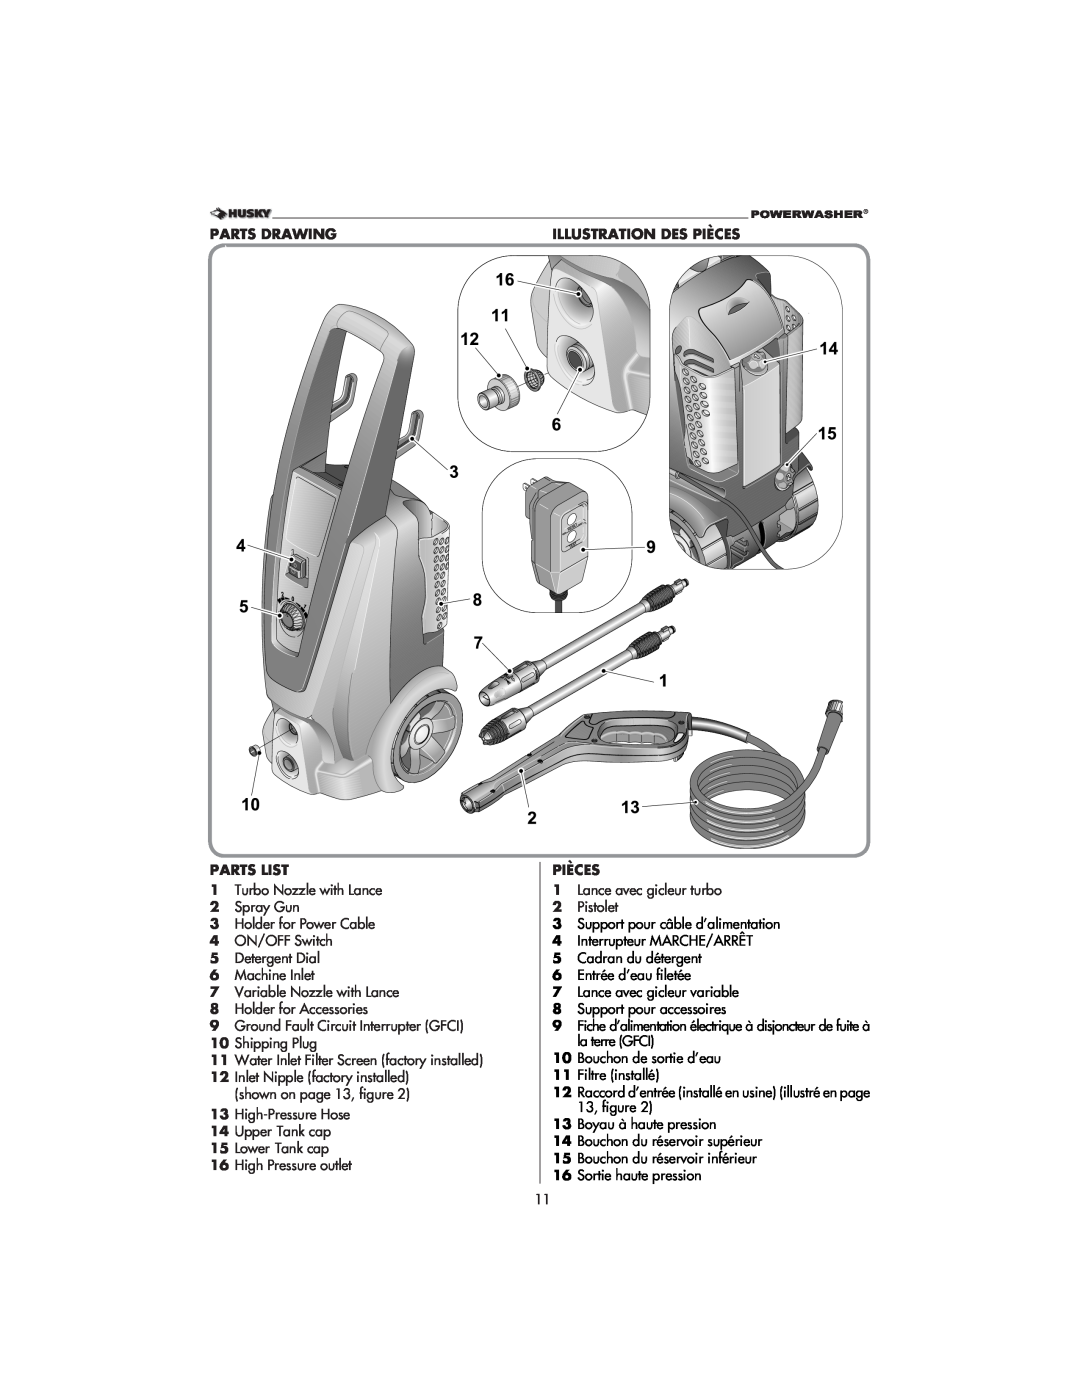 Husky 1800 CA manual Parts Drawing Parts List, Illustration Des Pièces Pièces 